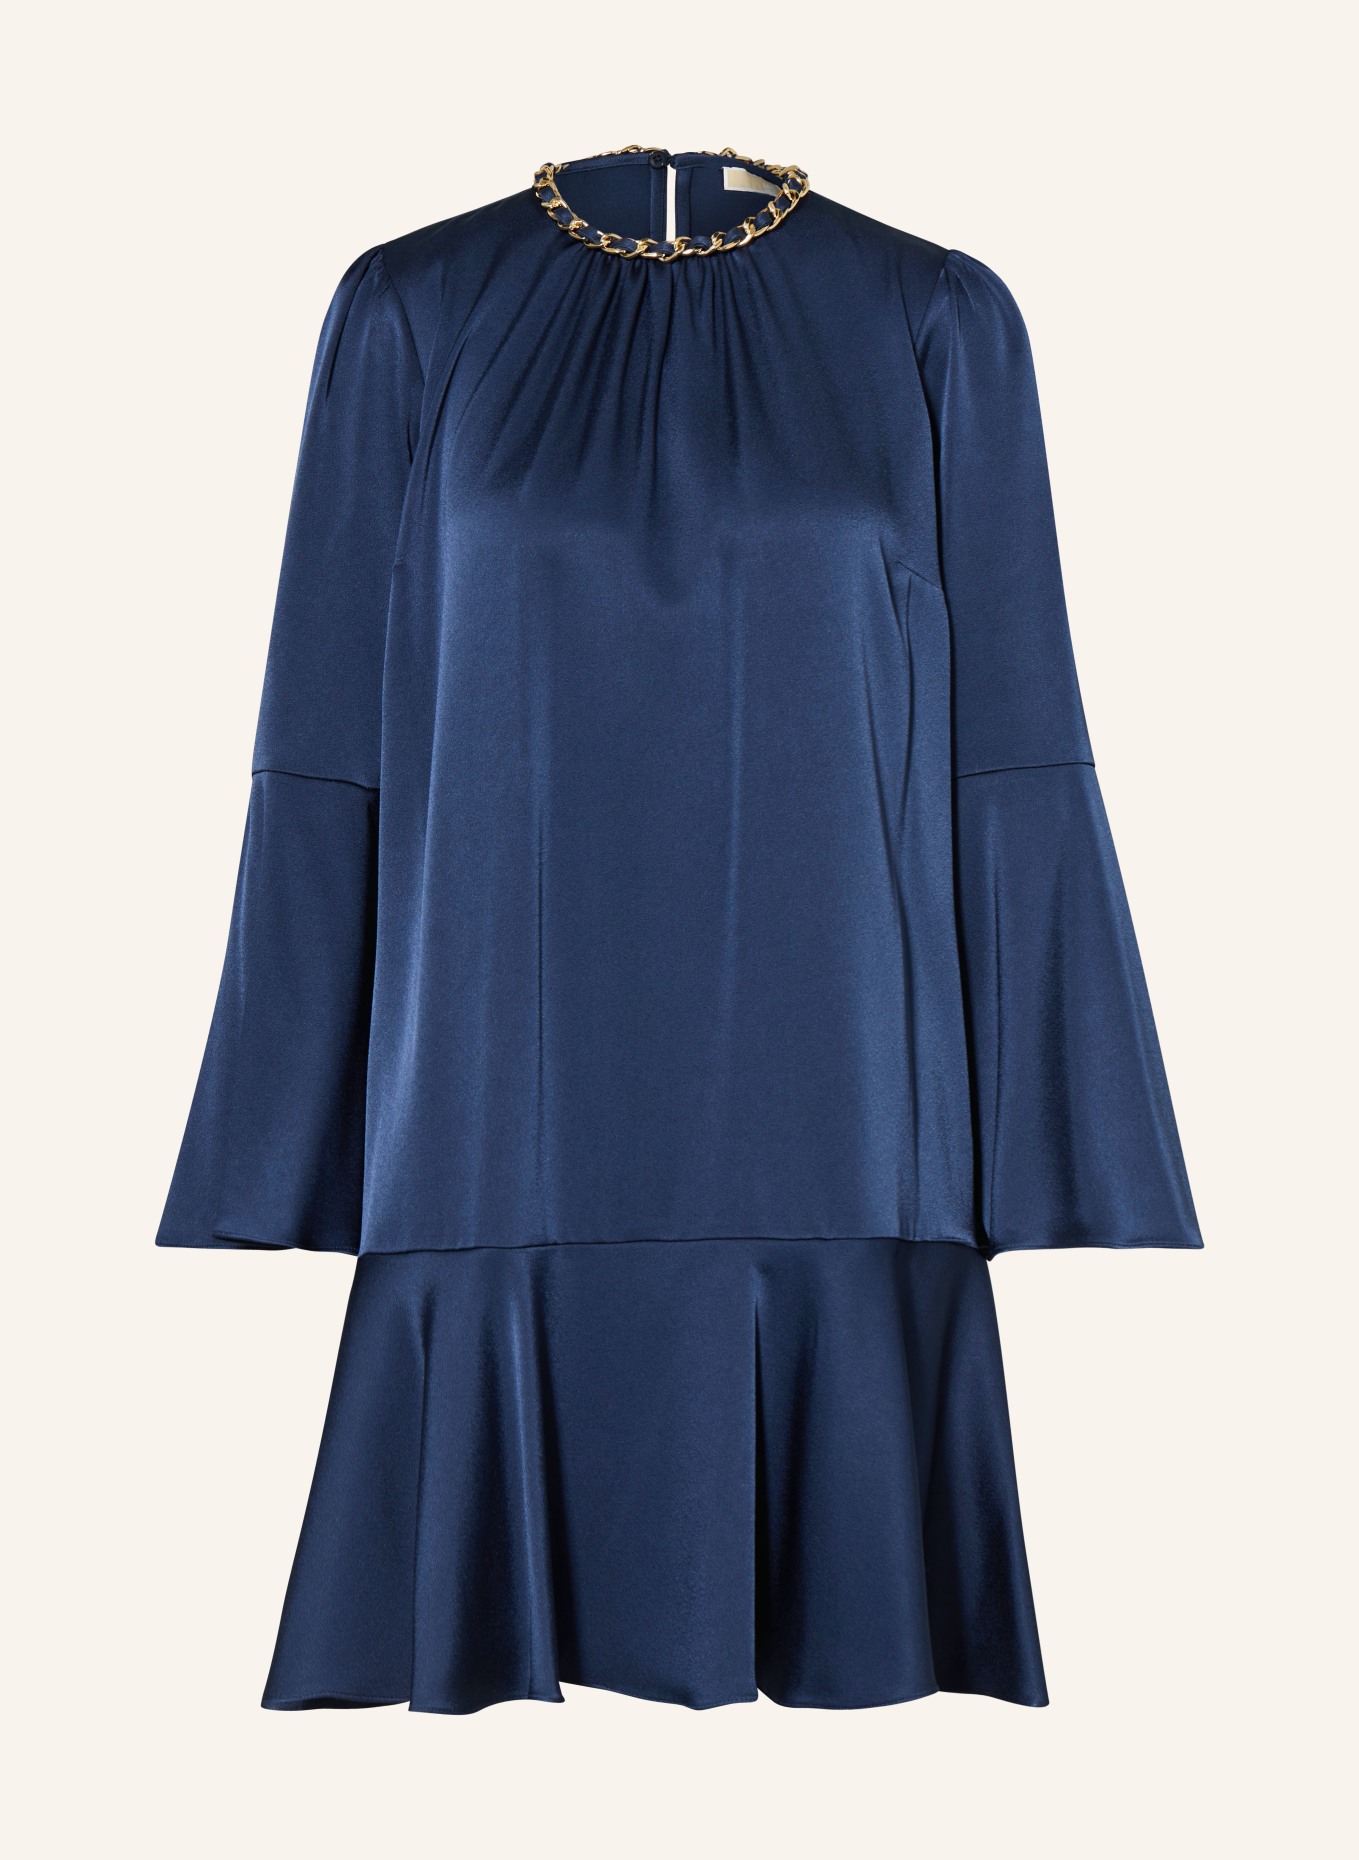 MICHAEL KORS Satin dress with frills, Color: DARK BLUE (Image 1)